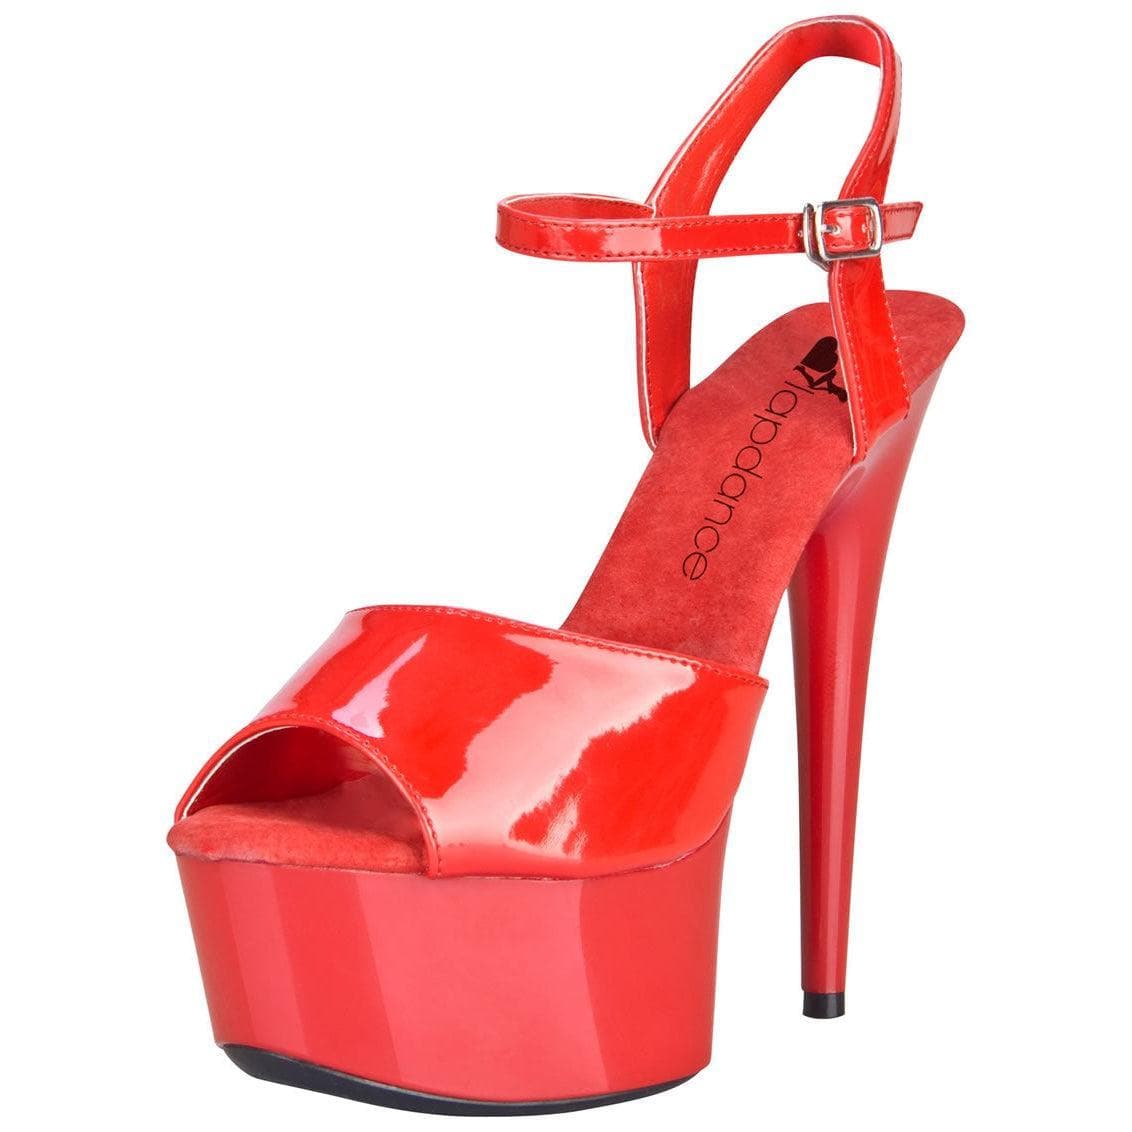 LapDance Shoes 6" Heel Red Platform Sandal with Strap - Romantic Blessings